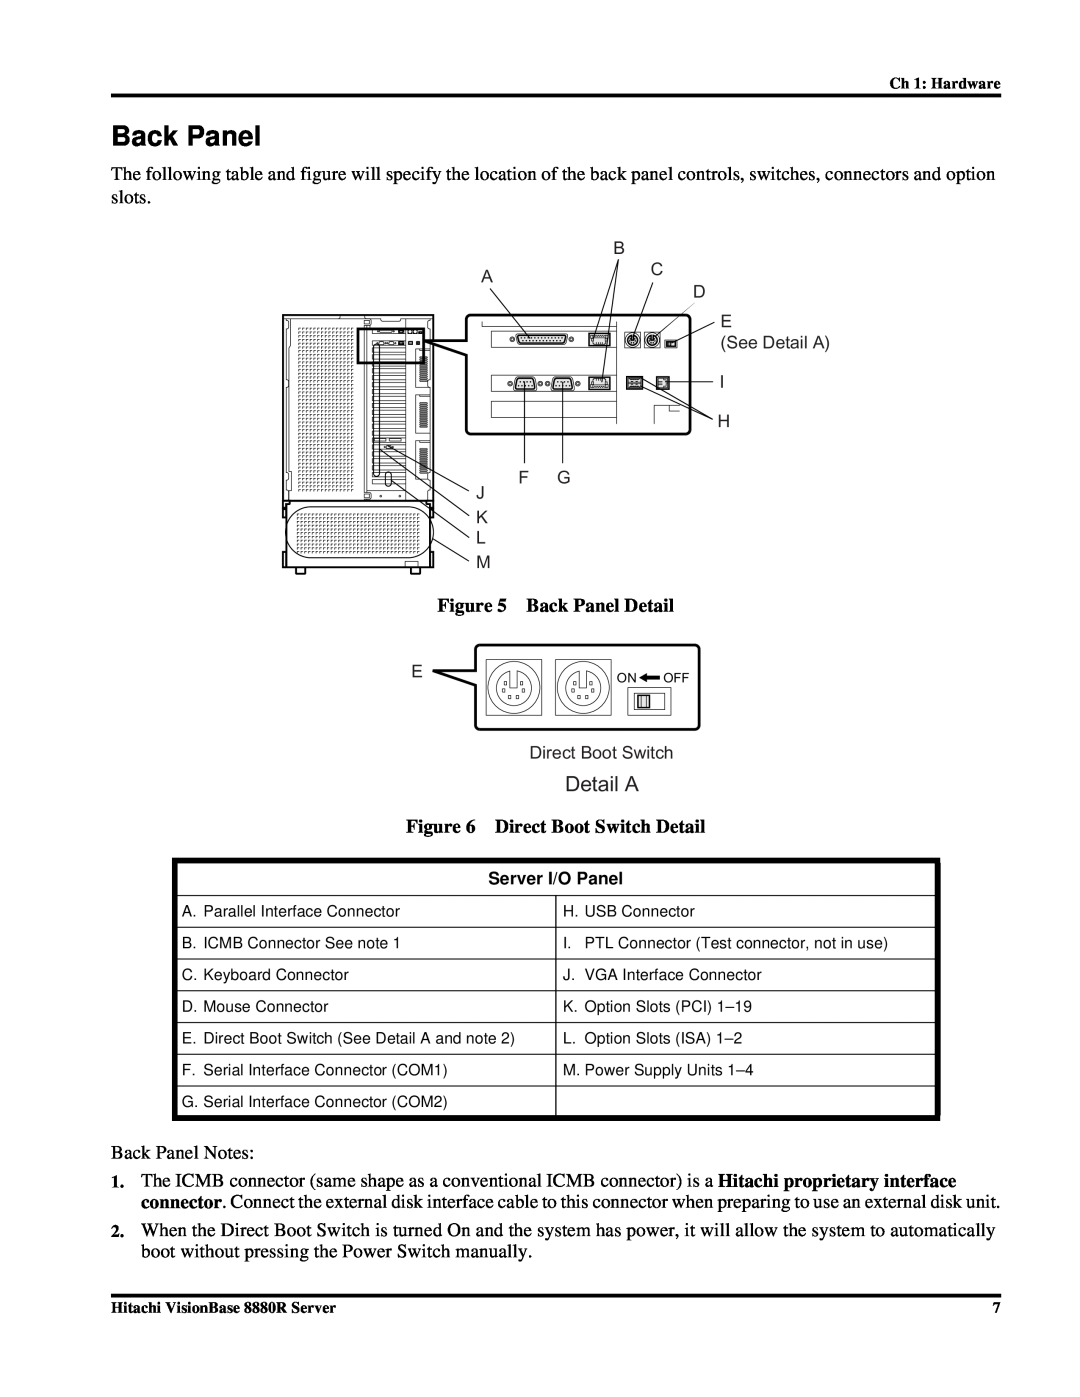 Hitachi 8880R manual Back Panel Detail, Direct Boot Switch Detail, Detail A 